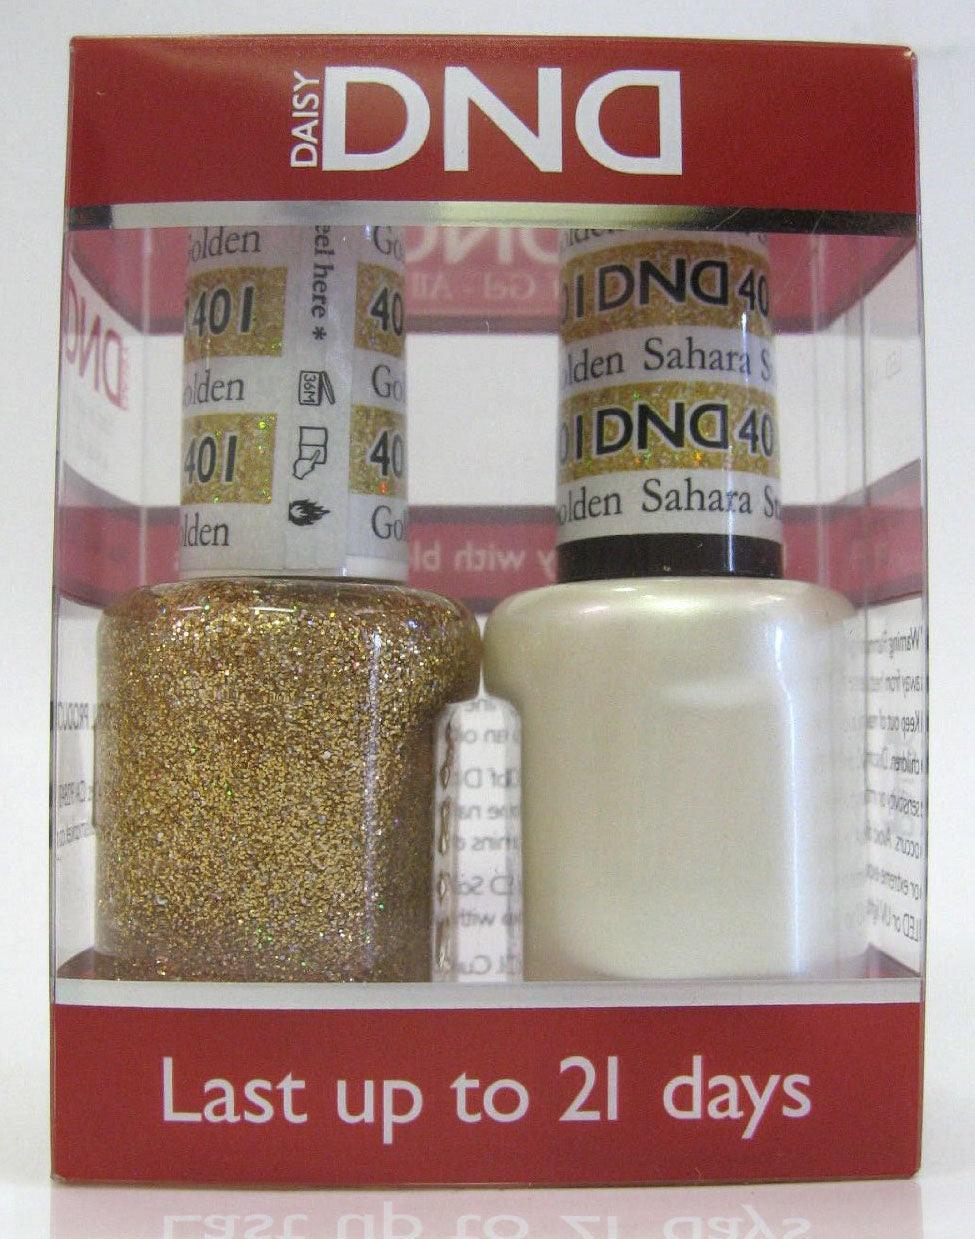 DND - Soak Off Gel Polish & Matching Nail Lacquer Set - #401 Golden Sahara Star